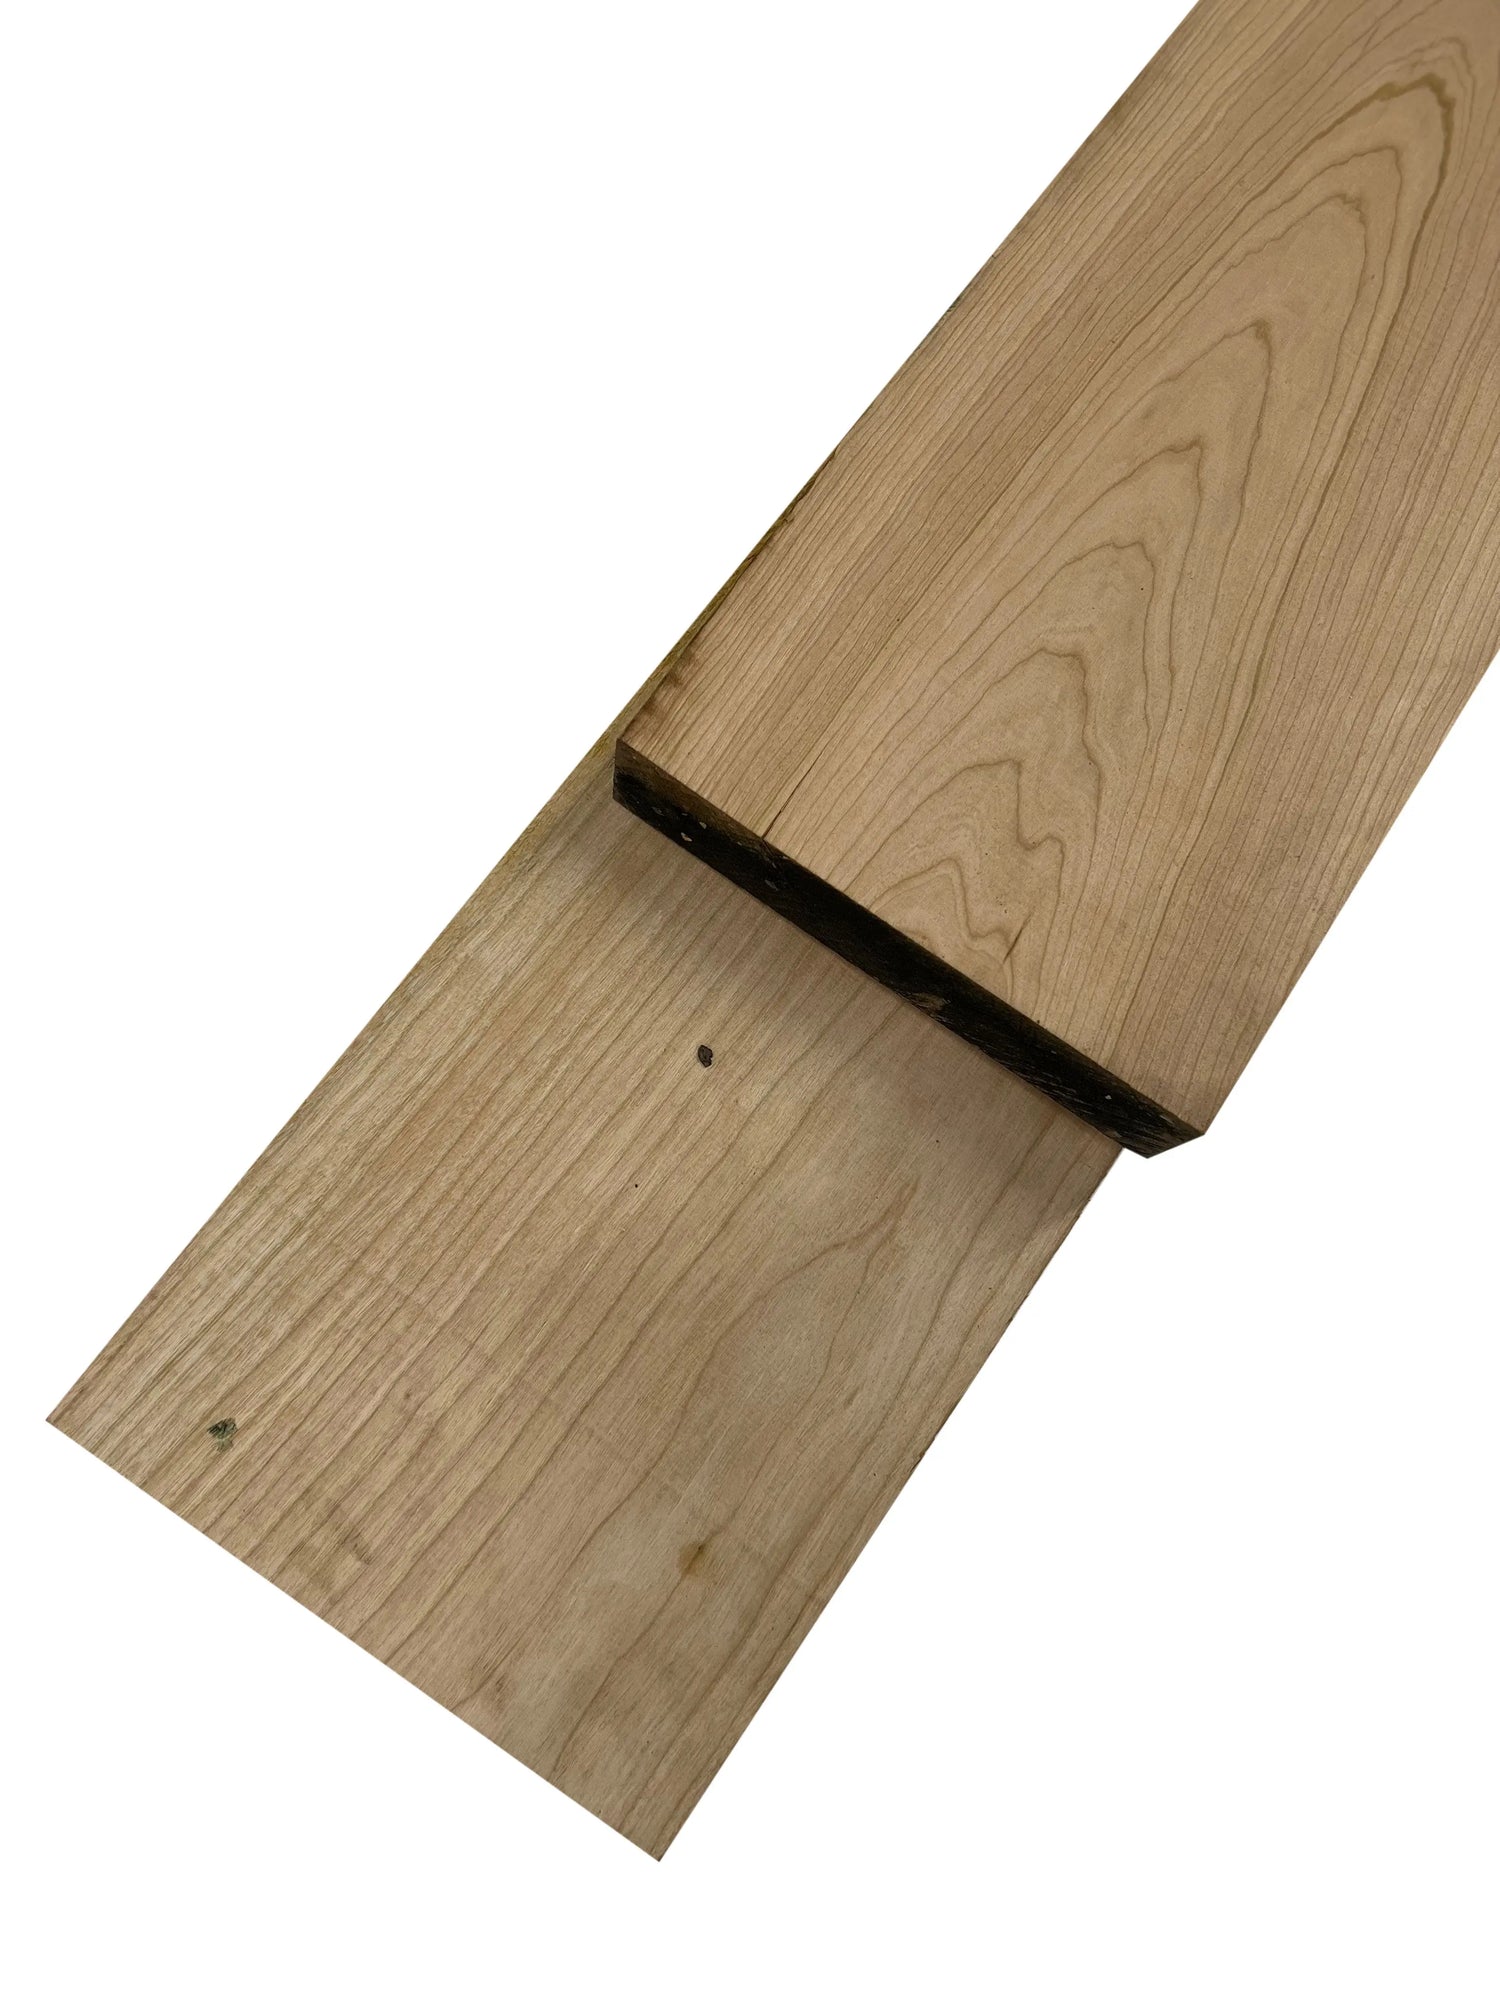 Premium American Hardwood 12/4 Cherry Lumber - Exotic Wood Zone - Buy online Across USA 